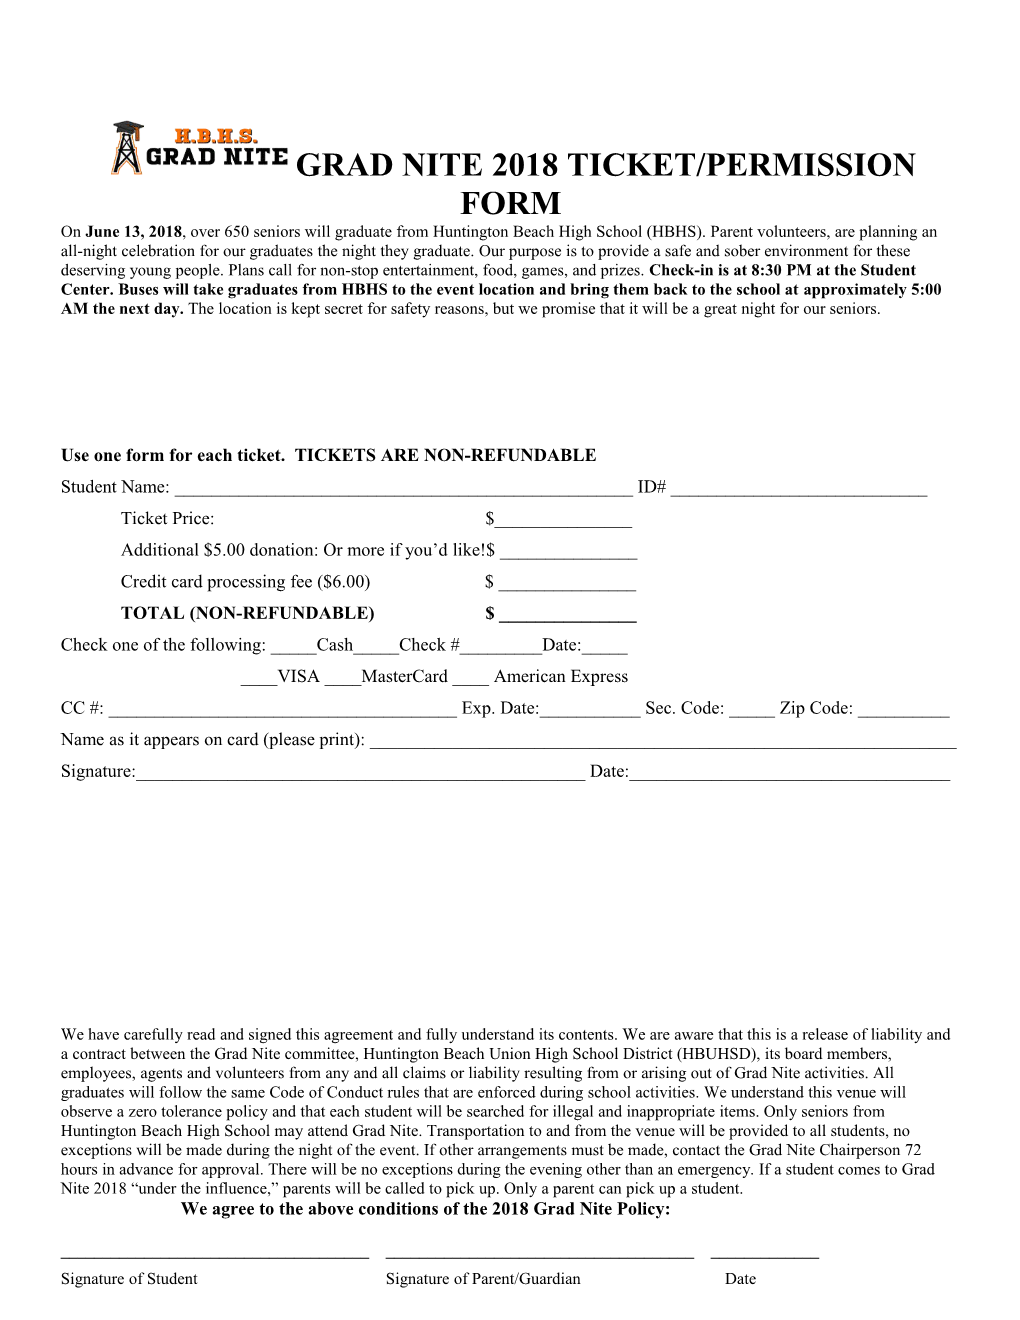 Grad Nite 2018 Ticket/Permission Form